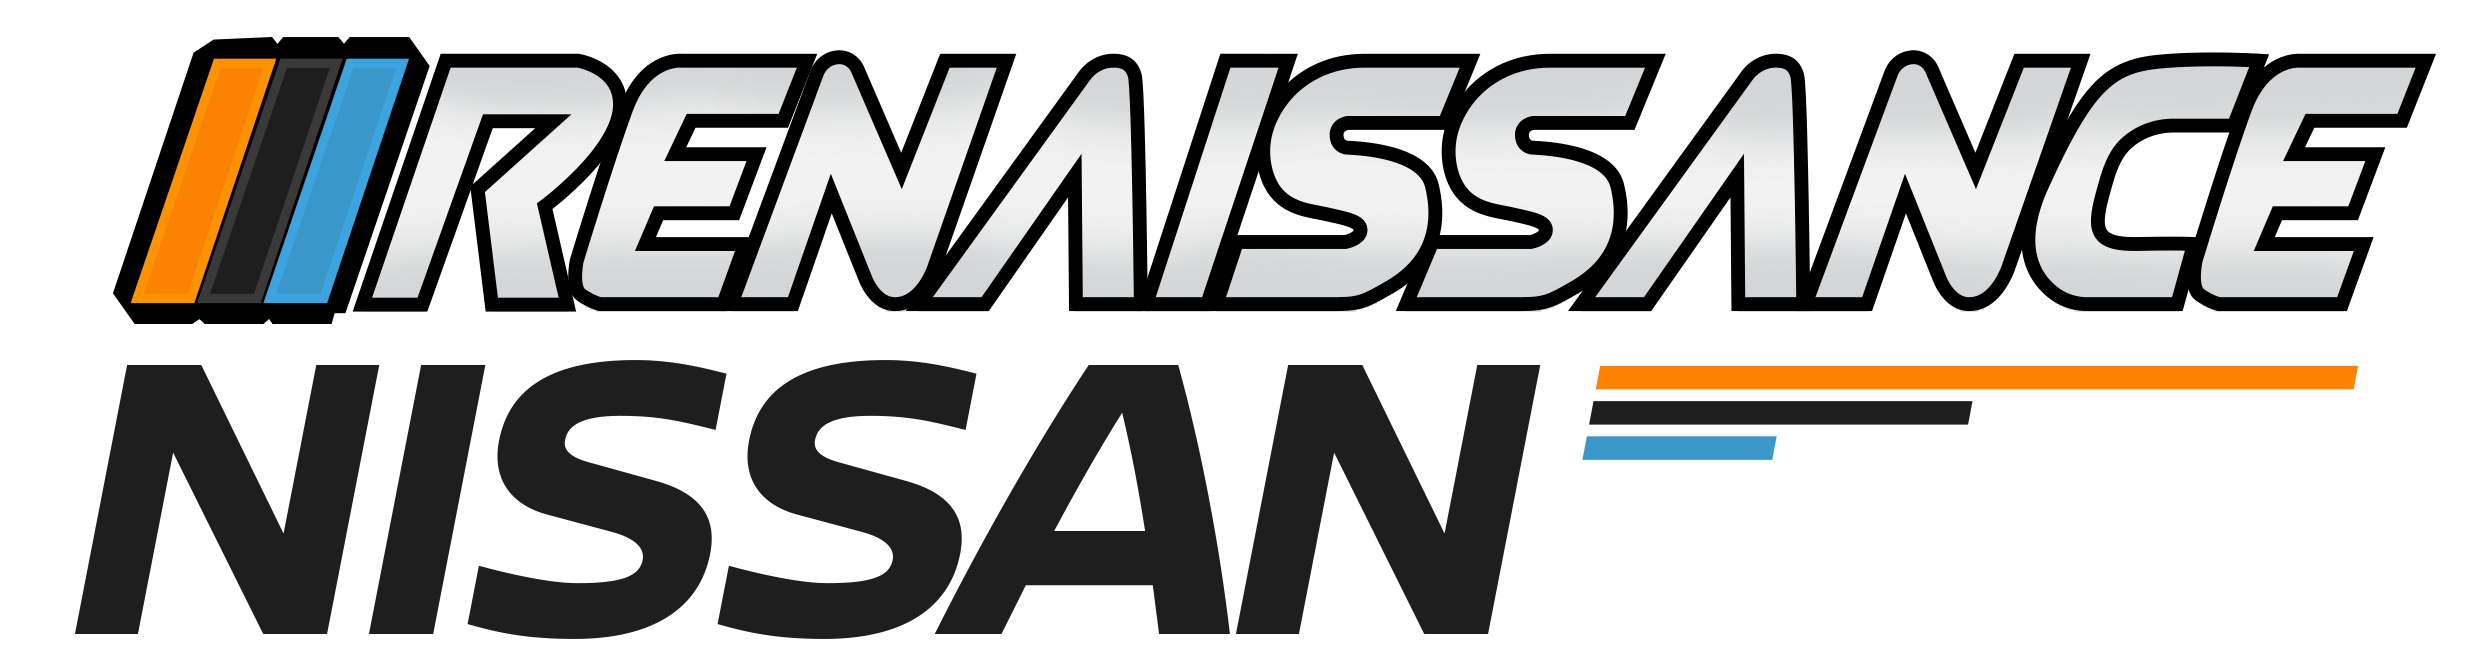 renaissance-nissan-logo